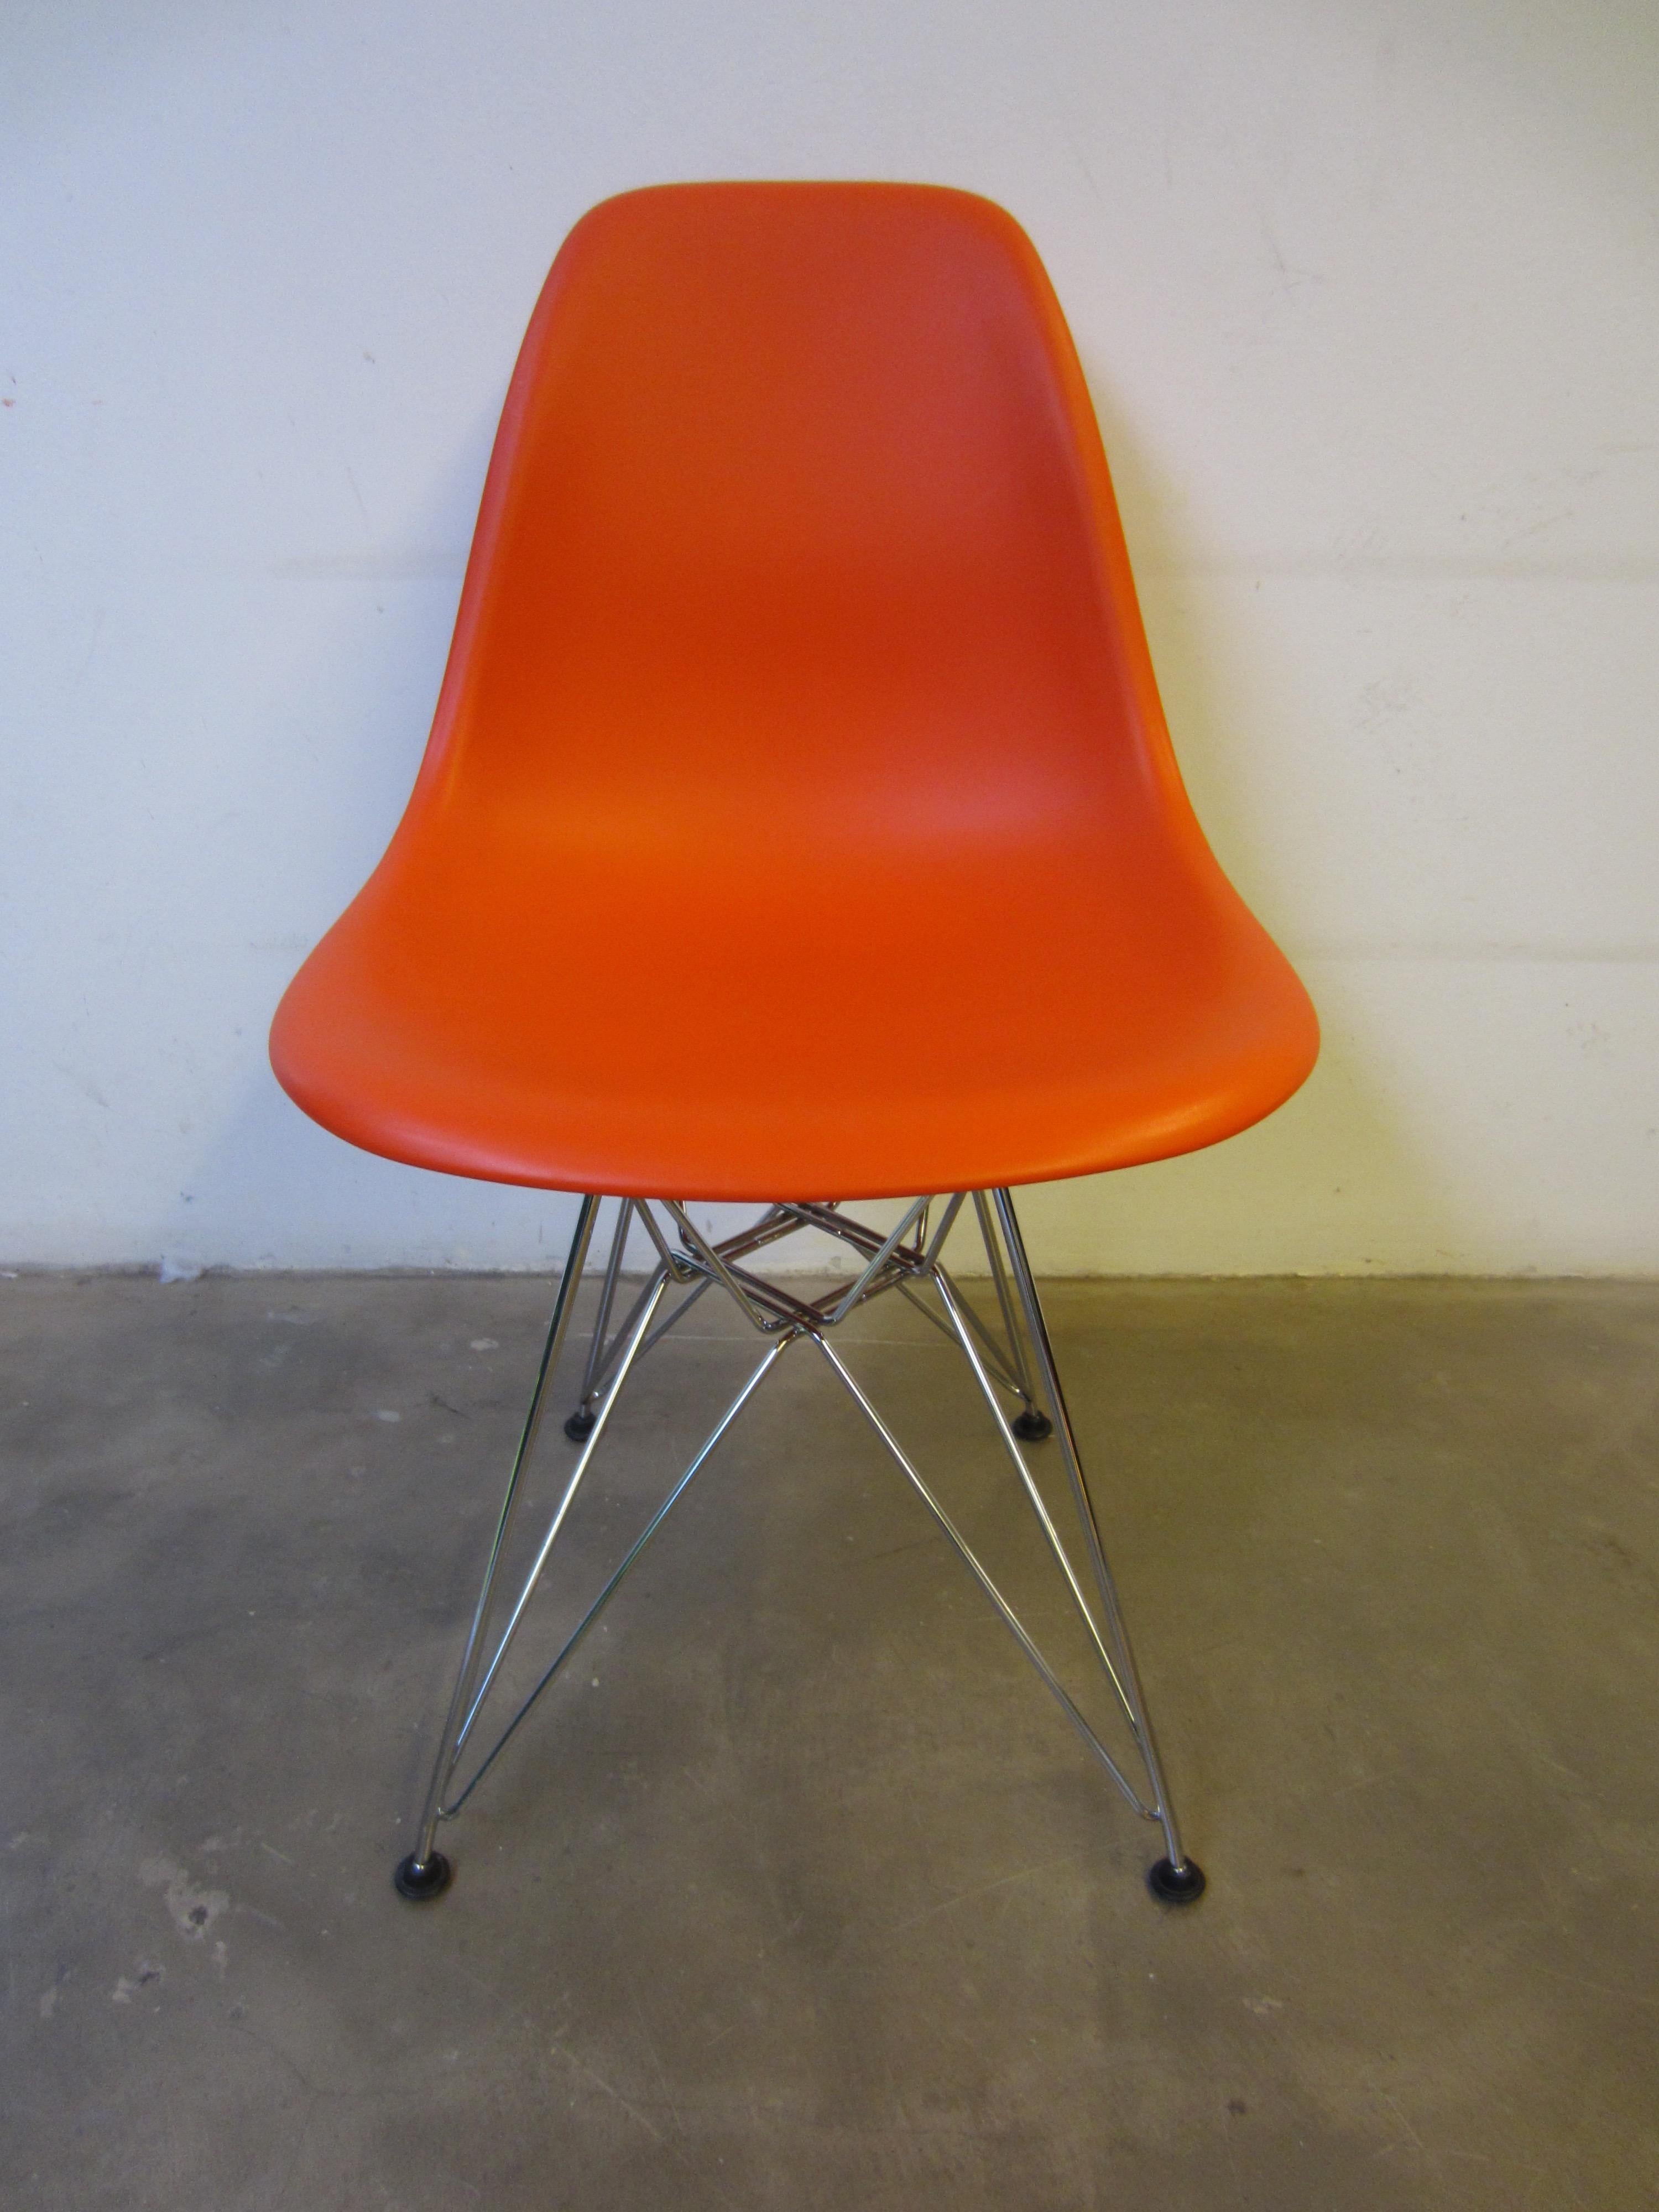 Eames plastic red chair, Charles & Ray Eames, Vitra.